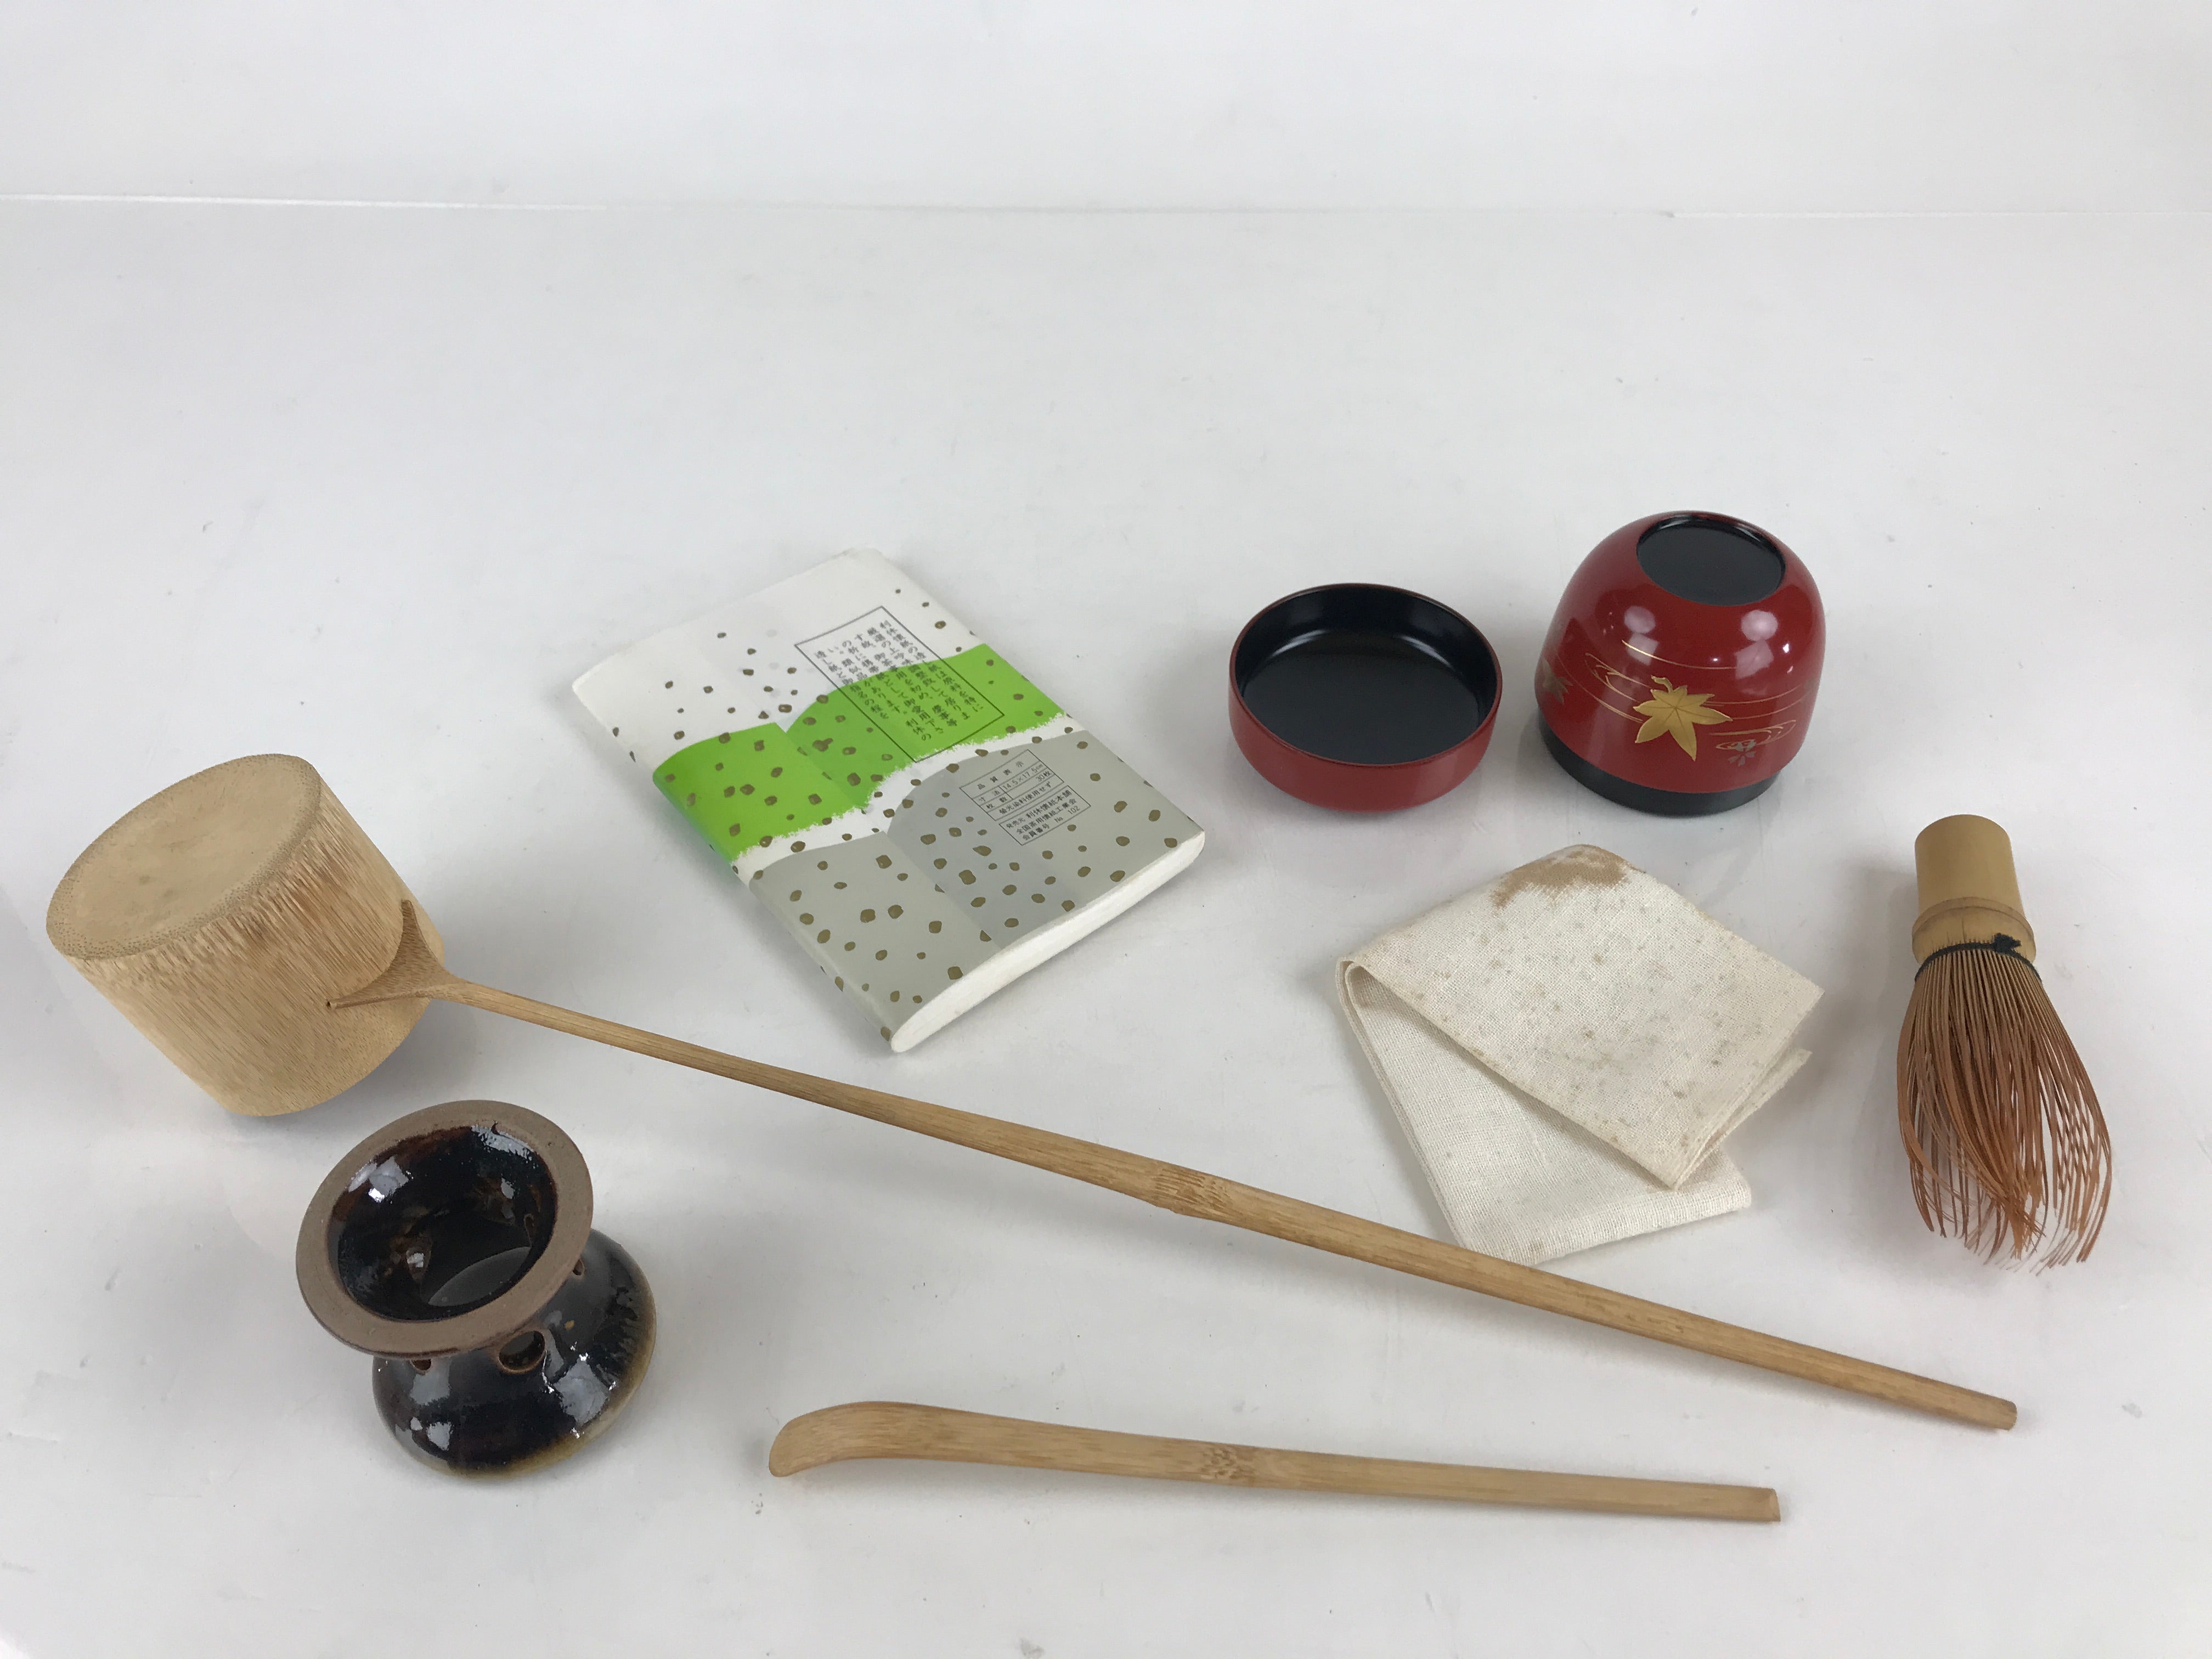 Japanese Tea Ceremony Set Chabako Wooden Box Vtg Pottery Chawan Sado PX680